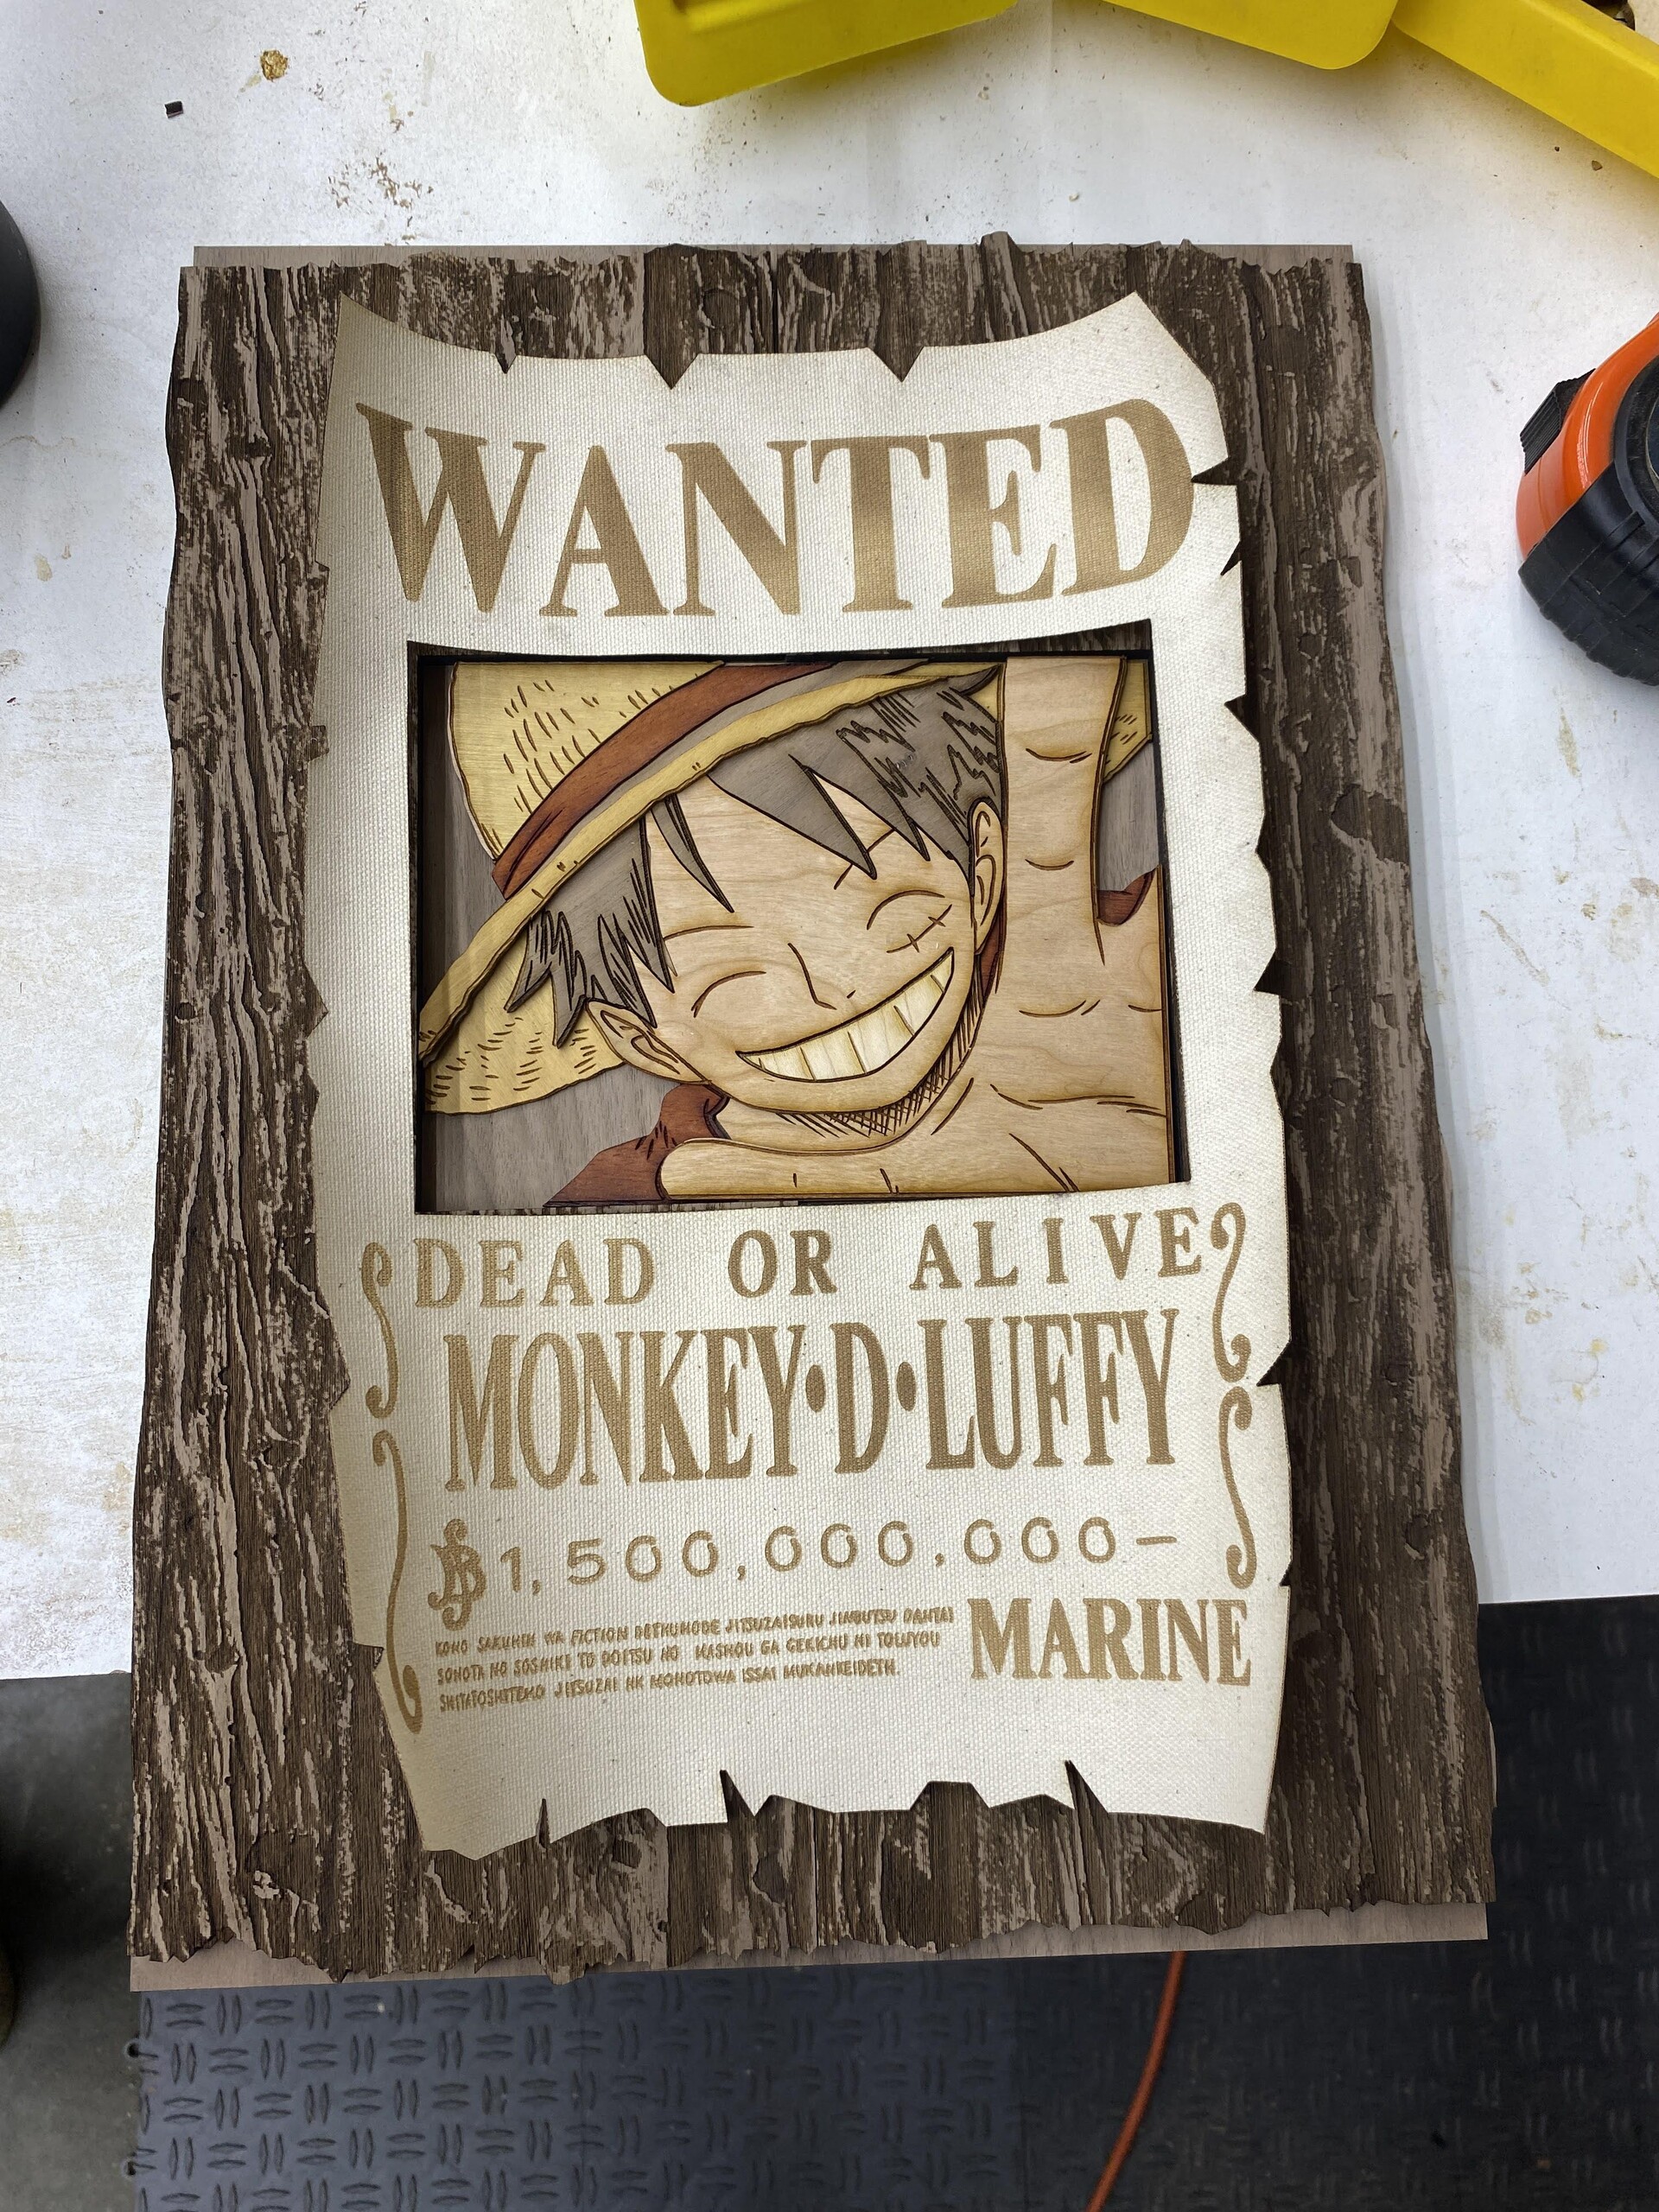 21 Luffy Wanted Poster Wallpapers  WallpaperSafari